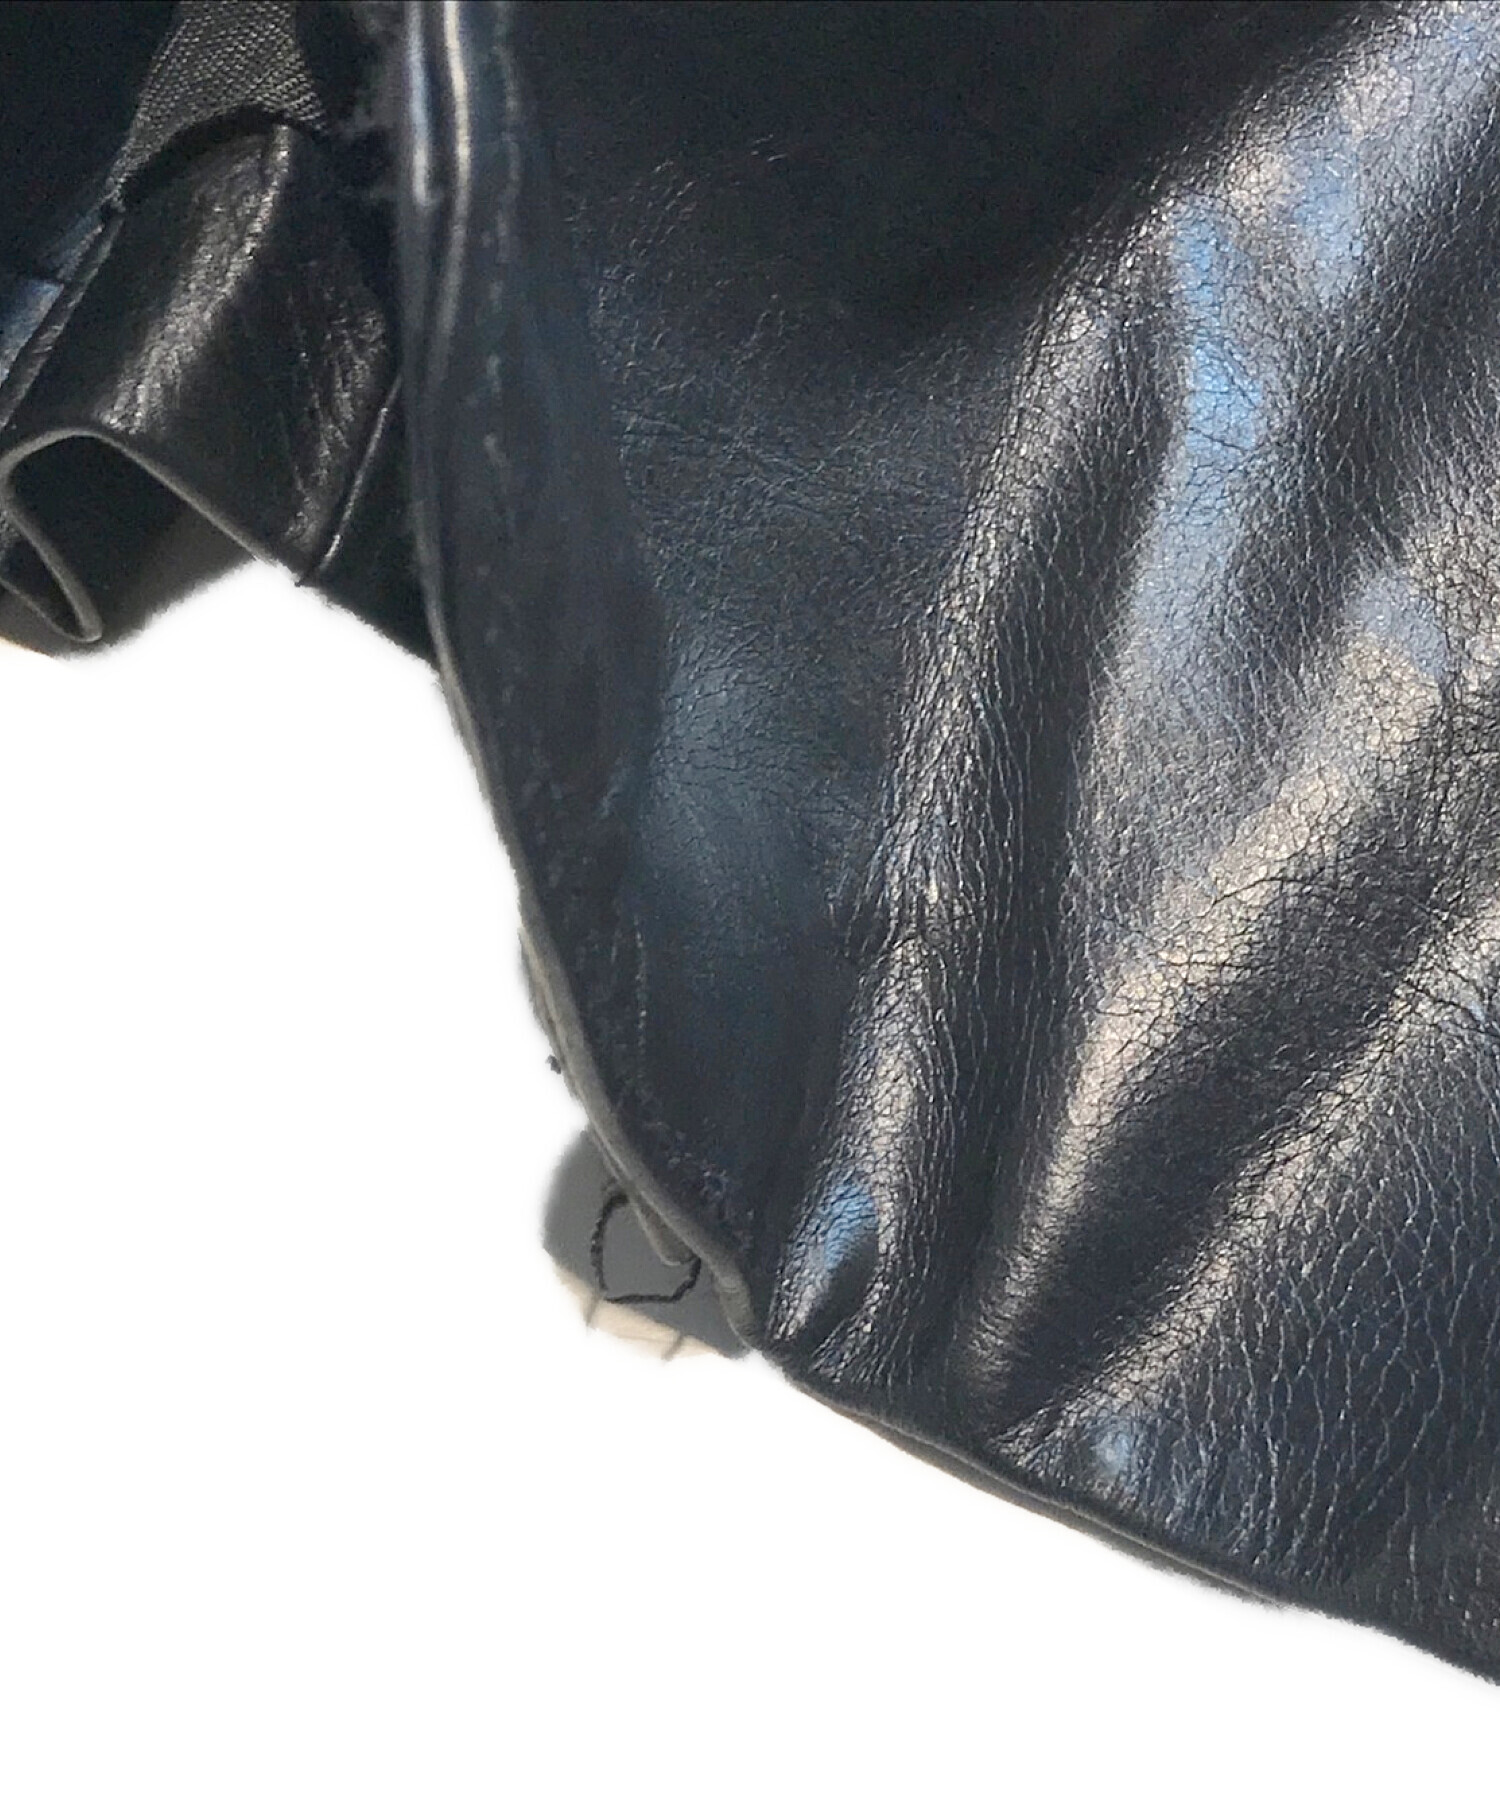 ANN DEMEULEMEESTER (アンドゥムルメステール) レザージャケット ブラック サイズ:SIZE 38